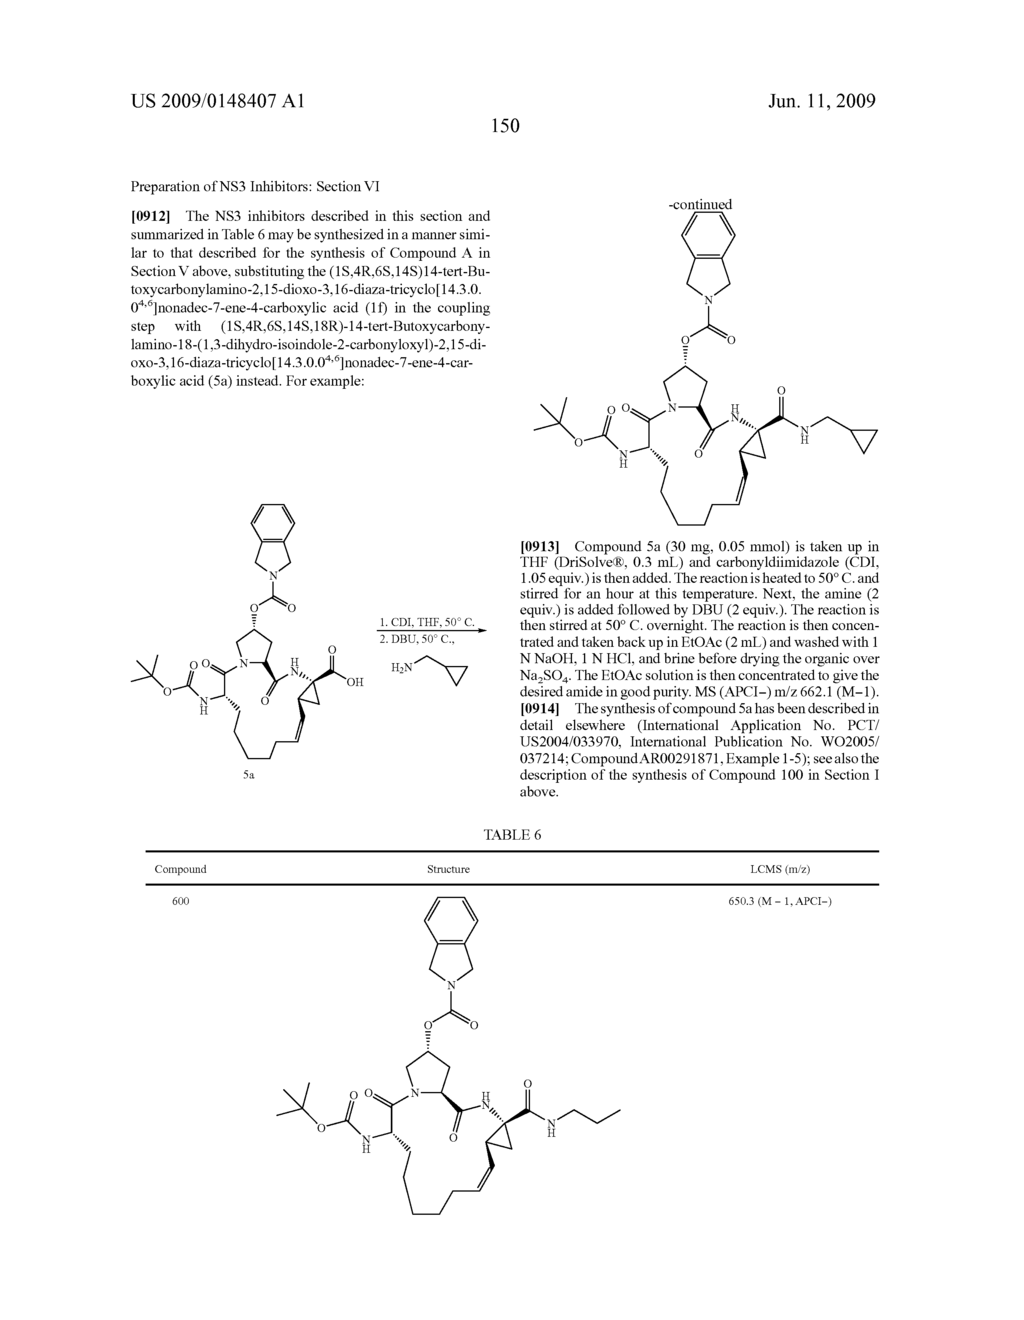 Novel Macrocyclic Inhibitors of Hepatitis C Virus Replication - diagram, schematic, and image 151